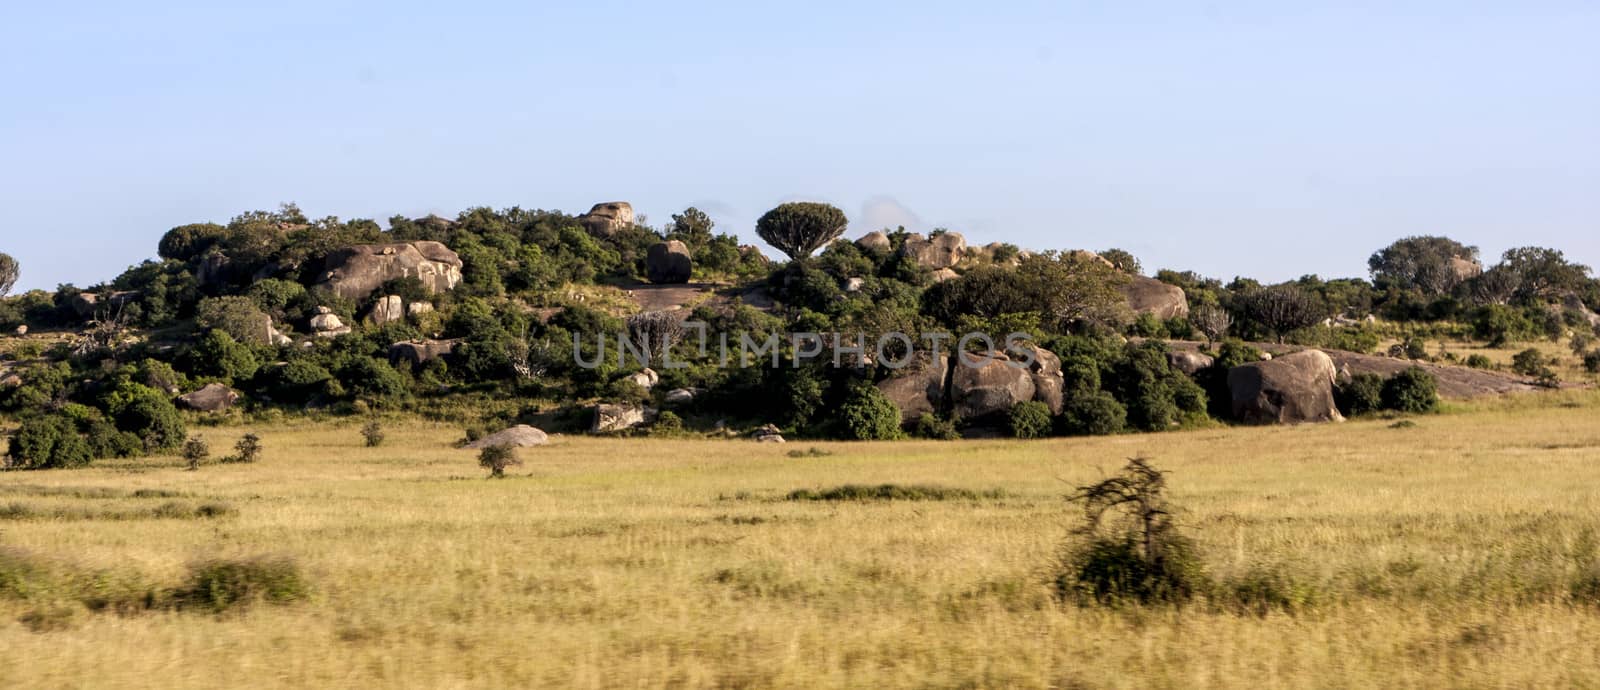 African Landscape by Imagecom